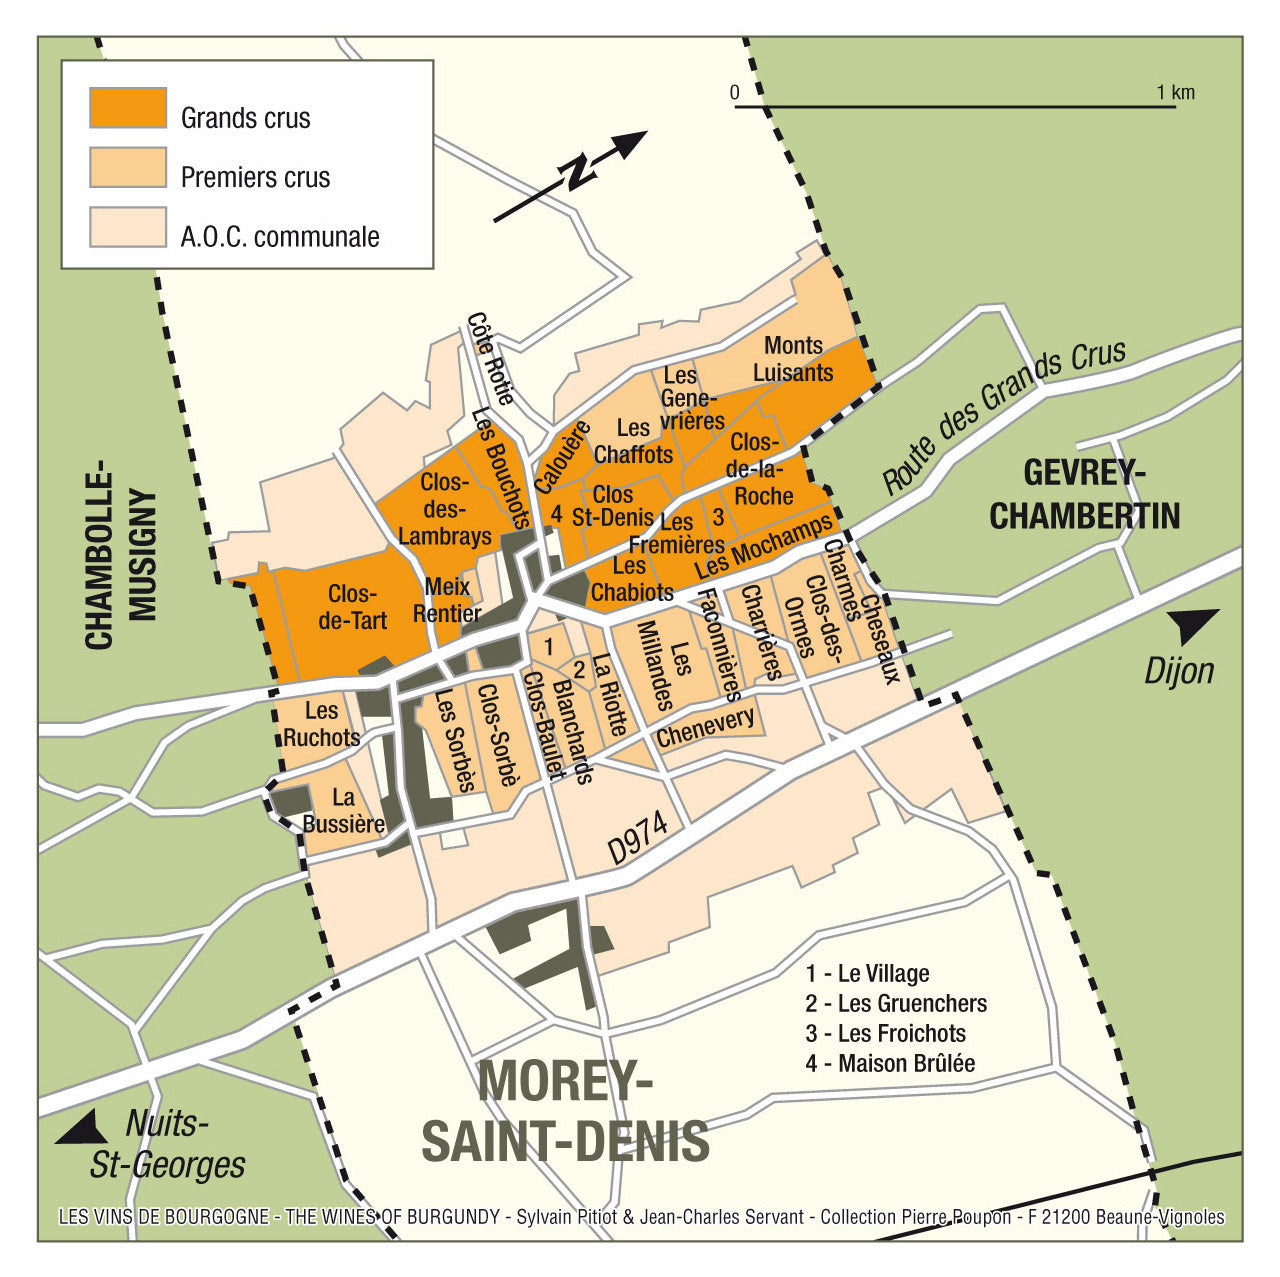 莫希-聖丹尼 Morey-Saint-Denis